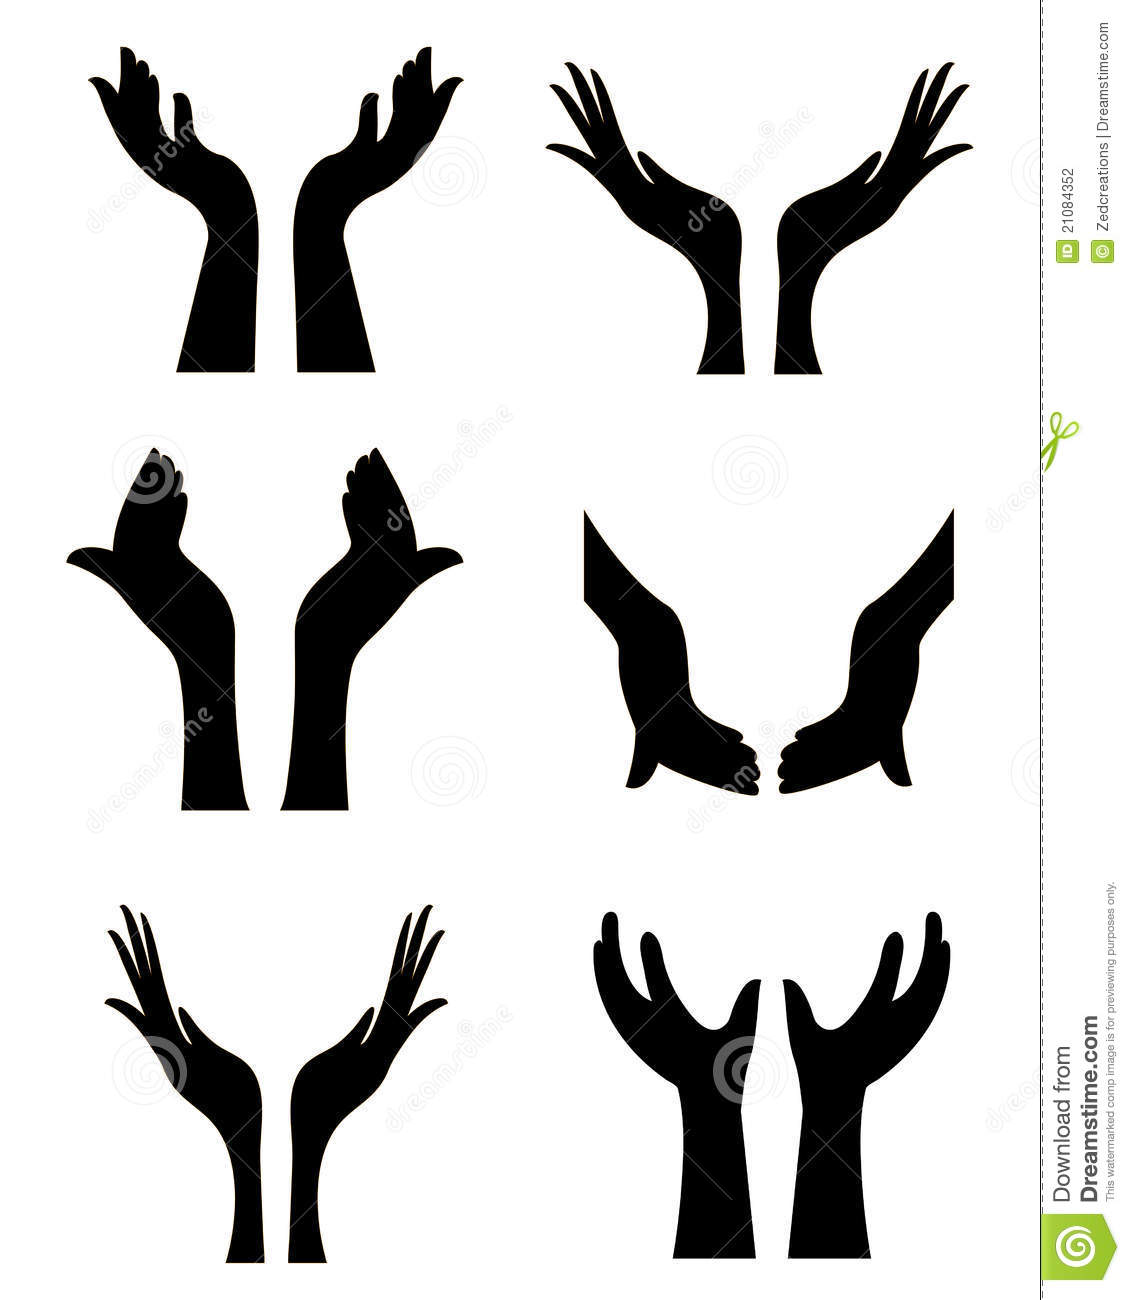 massage clipart hand silhouette